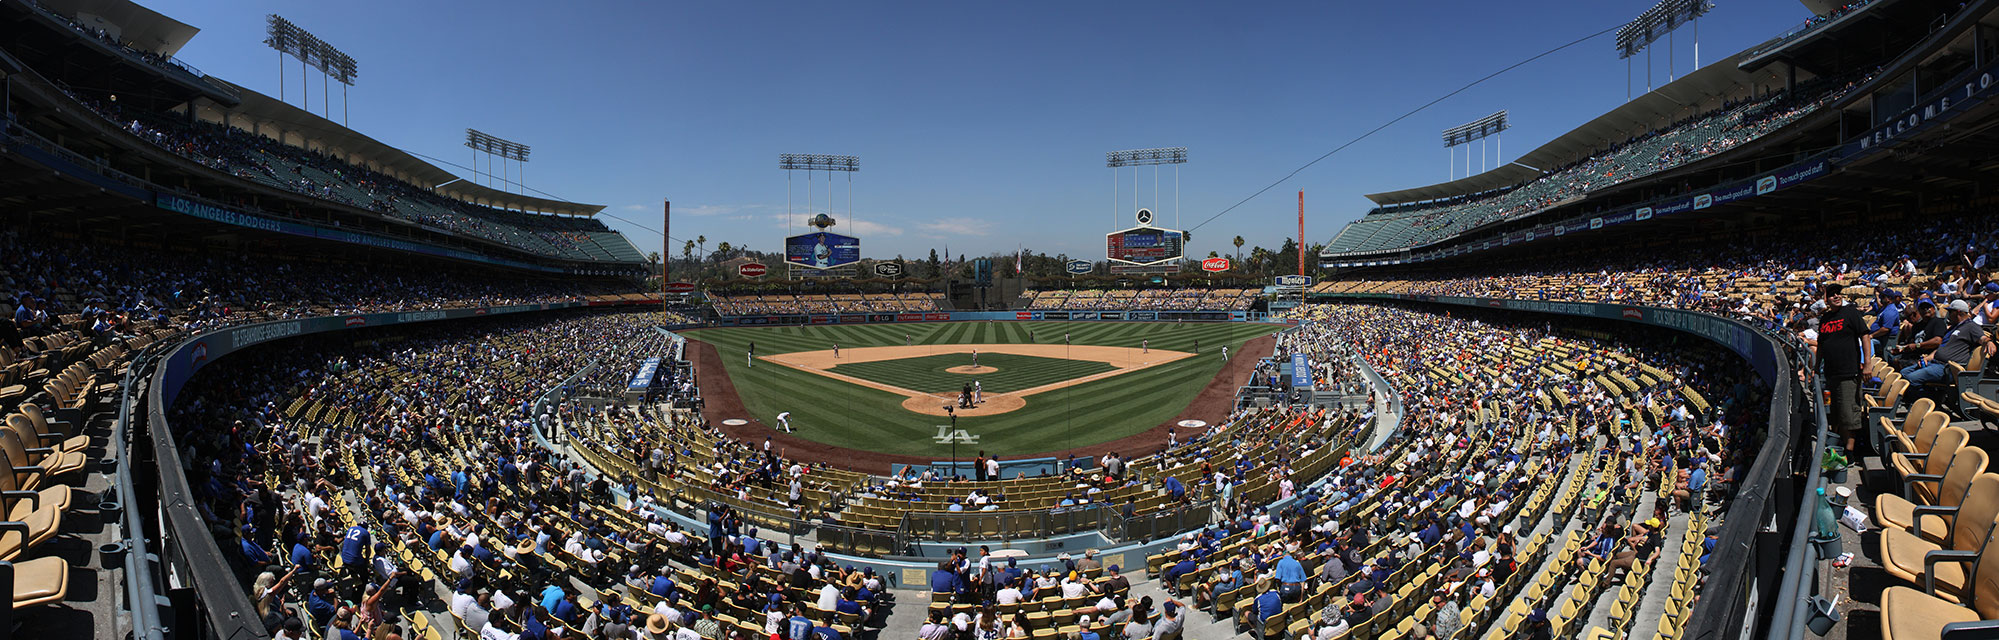 Dodgers Stadium. Photo: Tom Denne